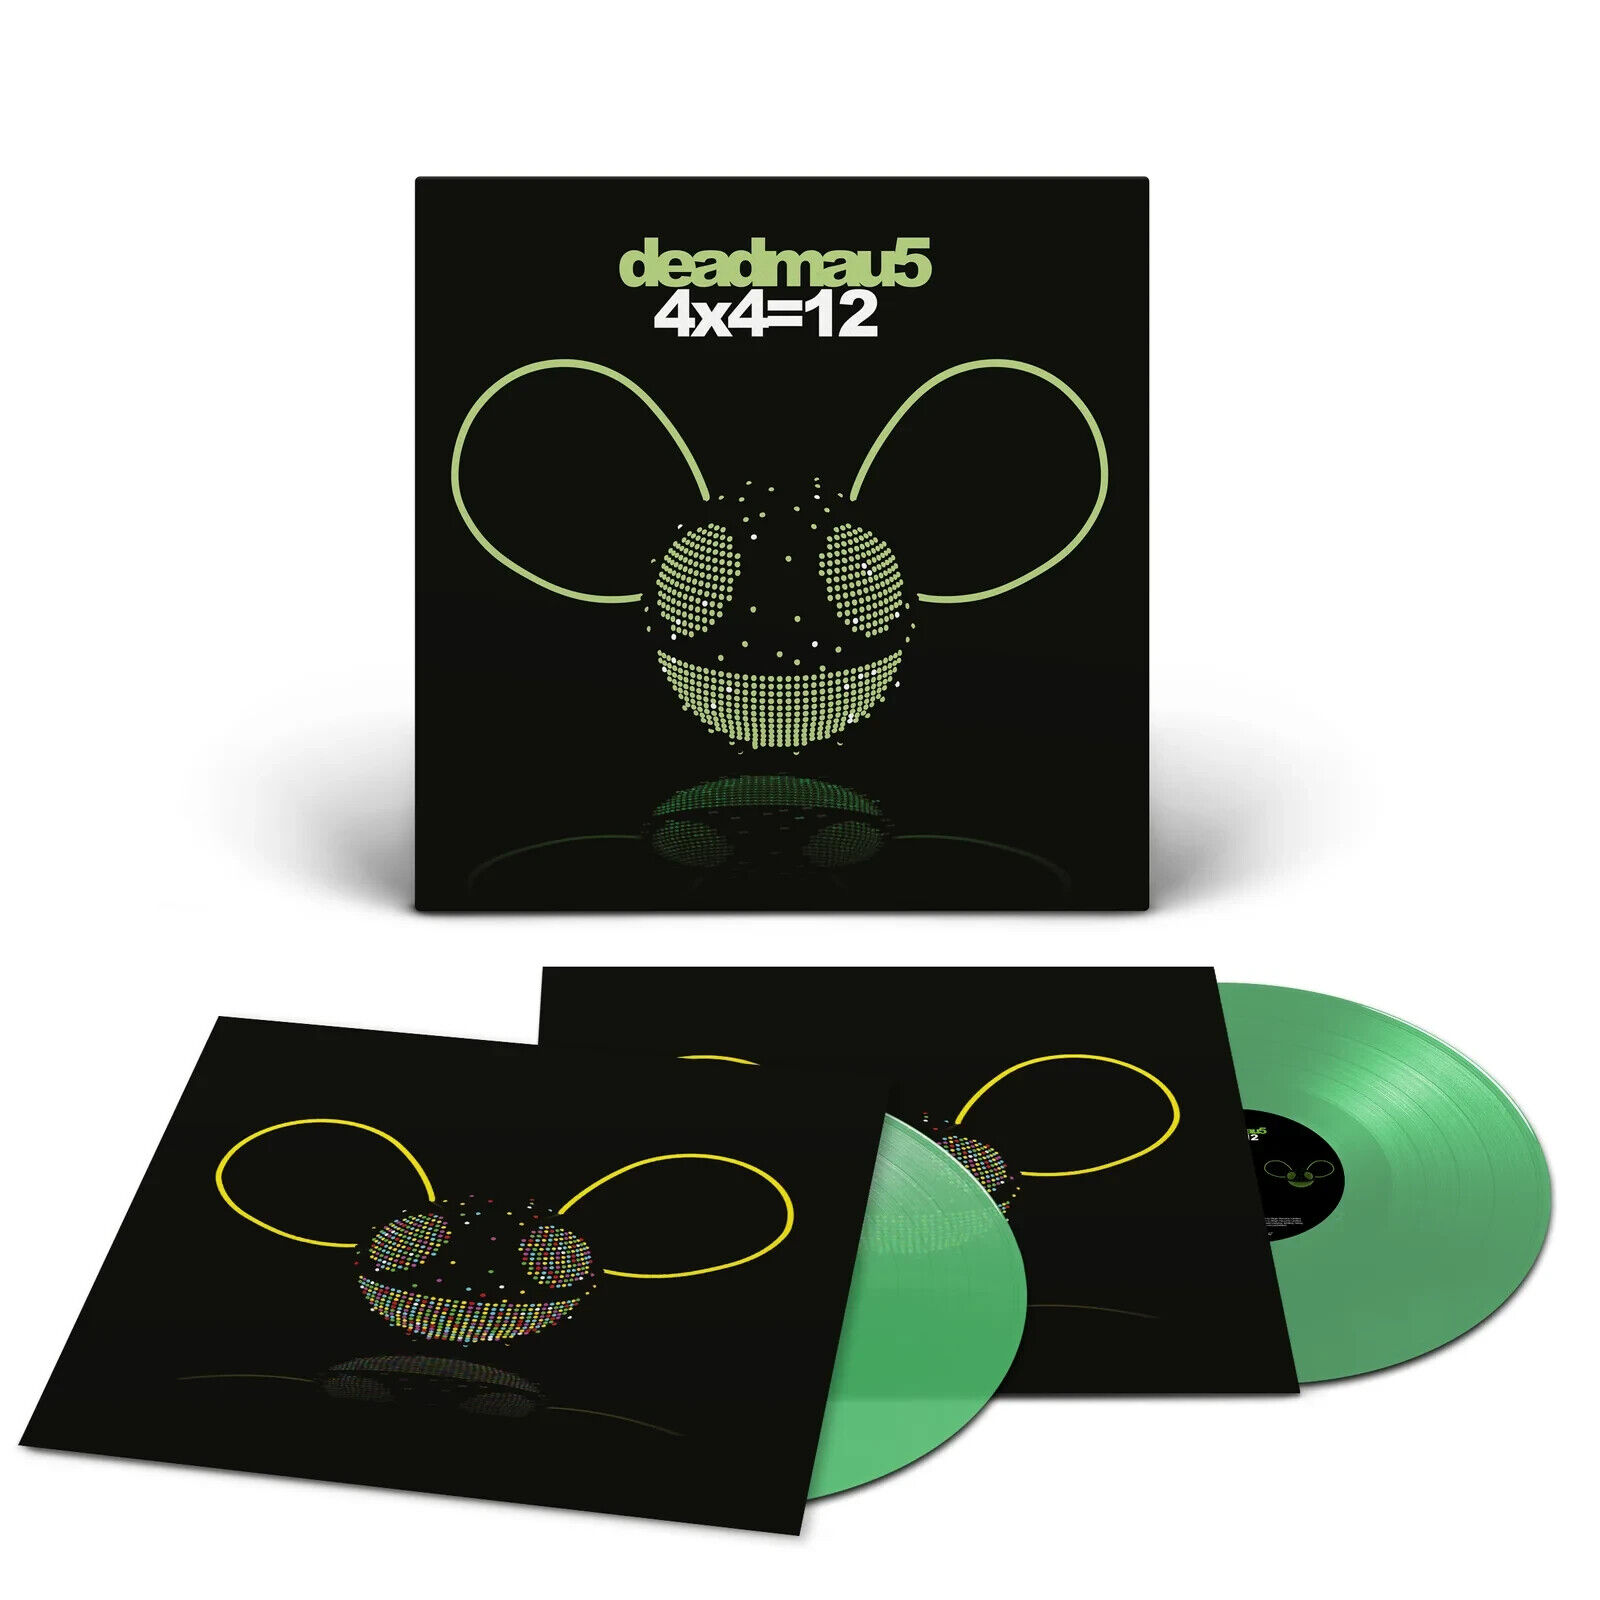 Deadmau5 4X4=12 Exclusive Limited Translucent Green Colored Vinyl 2XLP Record